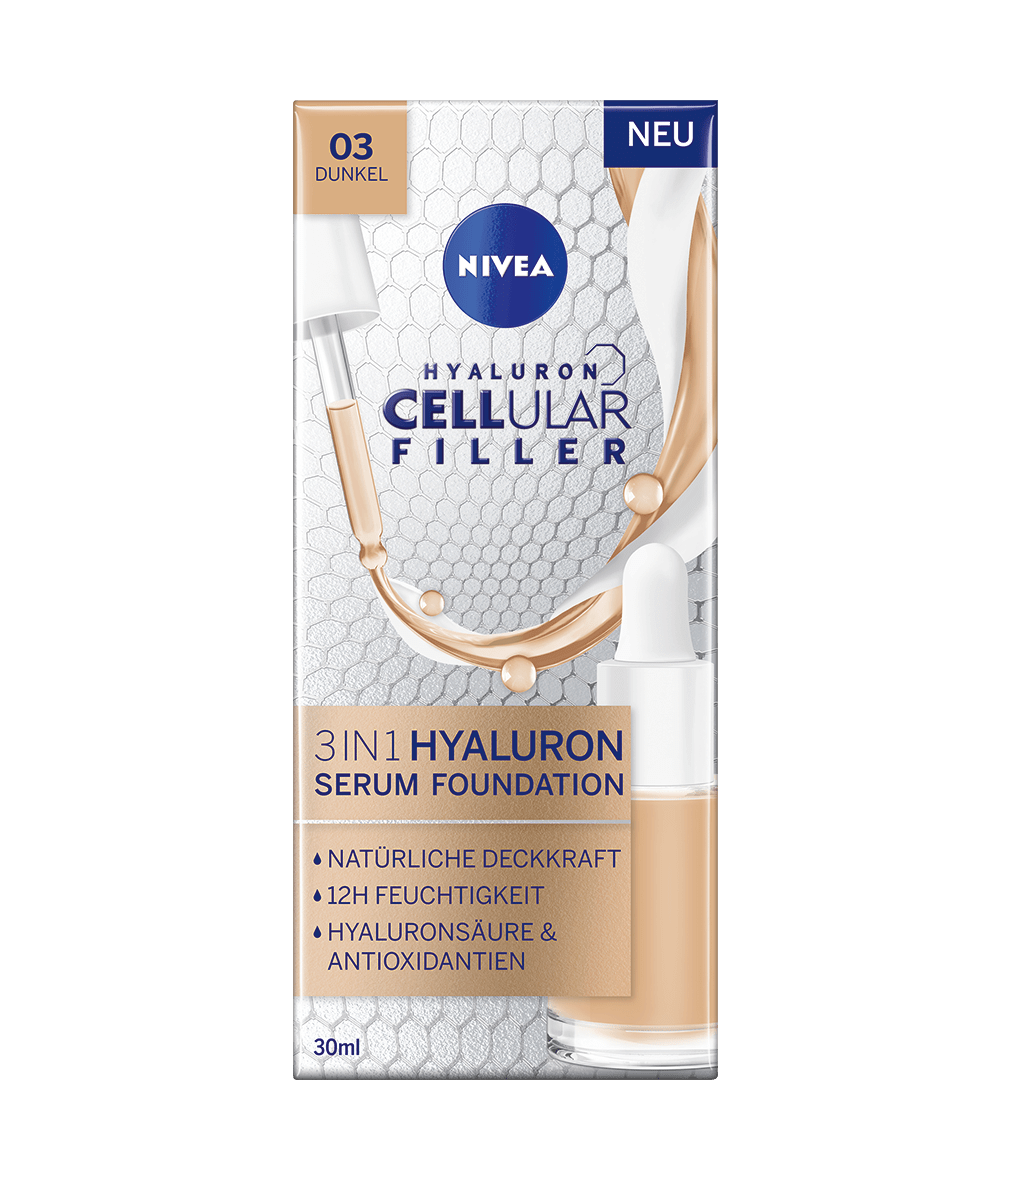 NIVEA Cellular 3in1 Hyaluron Serum Foundation dunkel